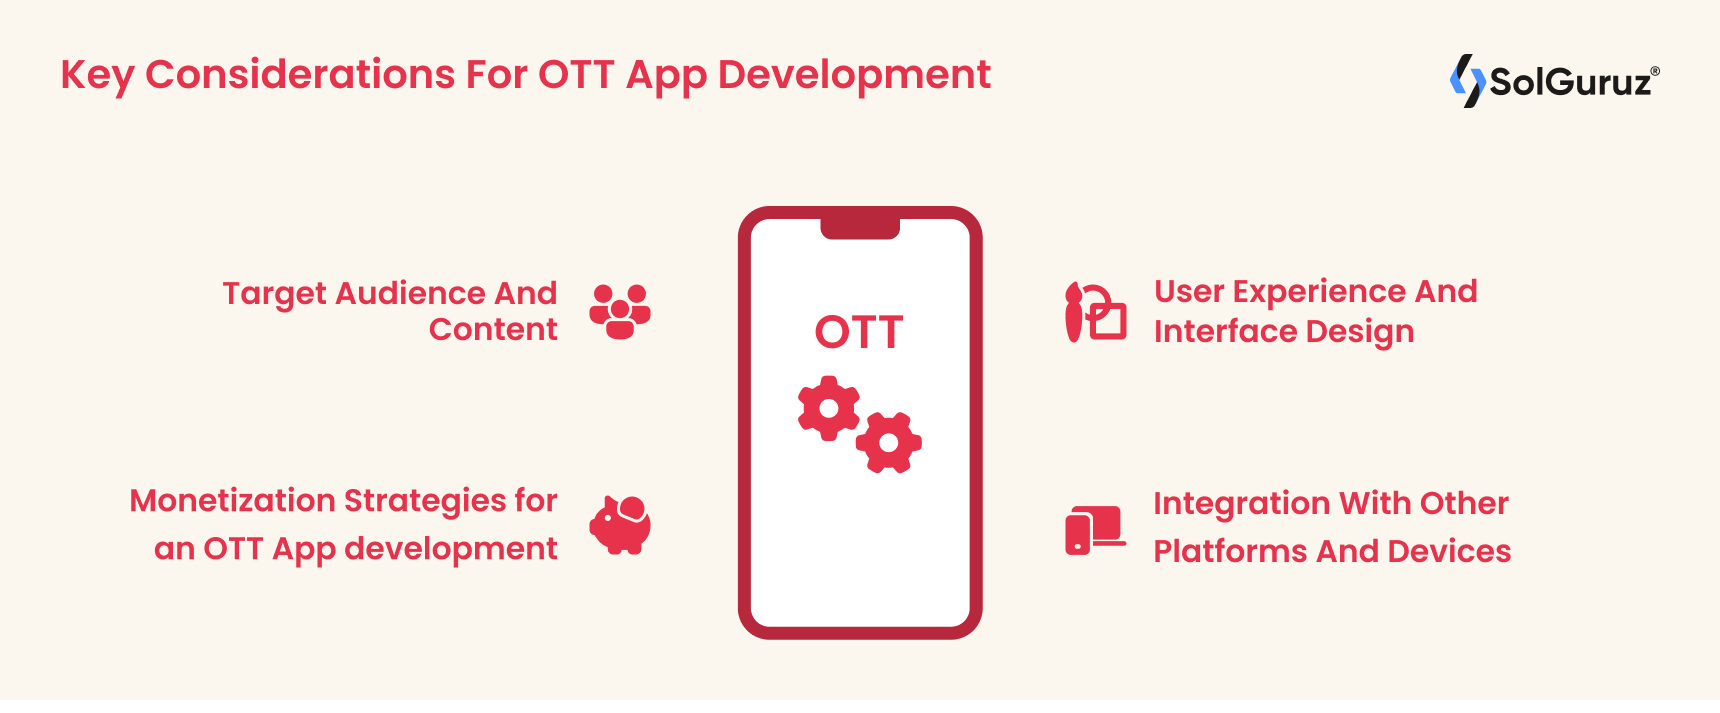 Key Considerations For OTT App Development